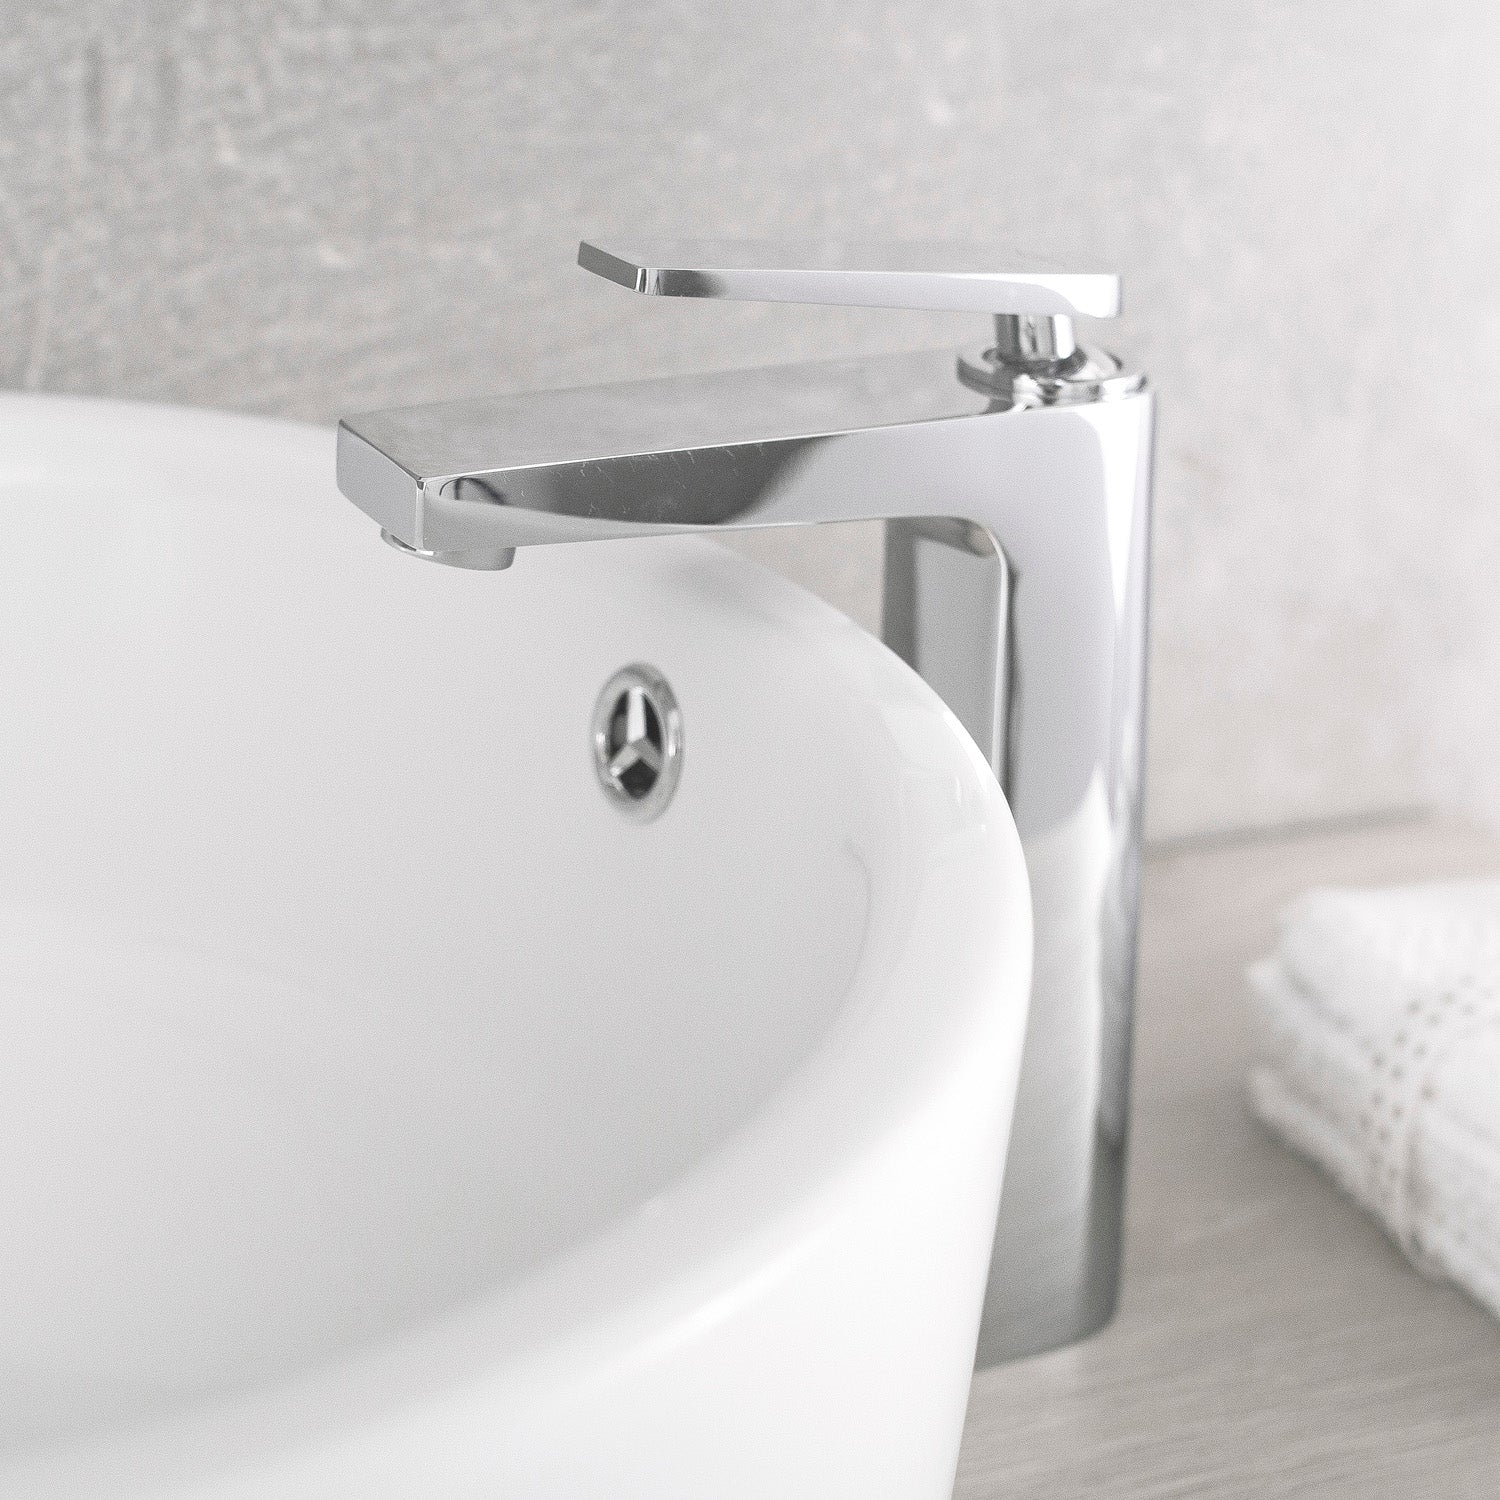 DAX Single Handle Vessel Sink Bathroom Faucet, Brass Body, Chrome Finish, 4-1/16 x 9-1/16 Inches (DAX-9802A)